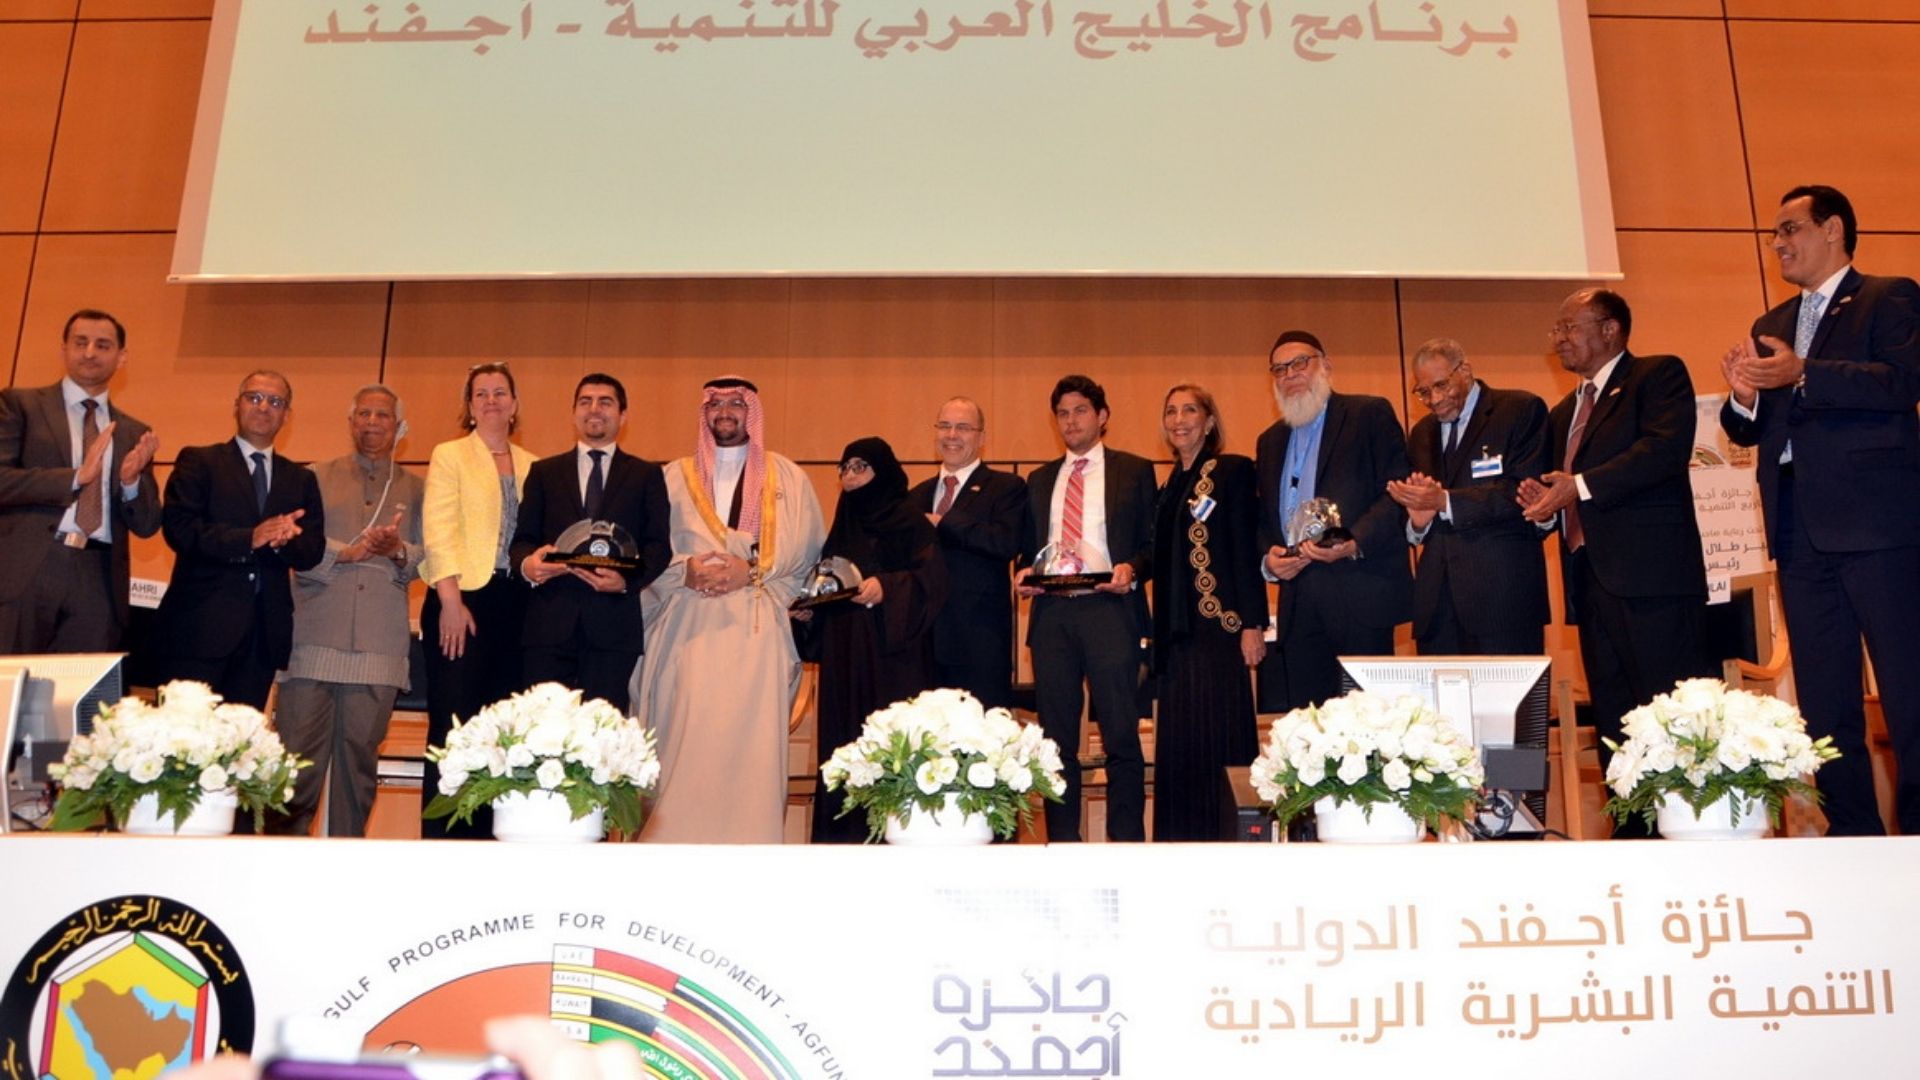 Prince Talal International Prize for Human Development 2015